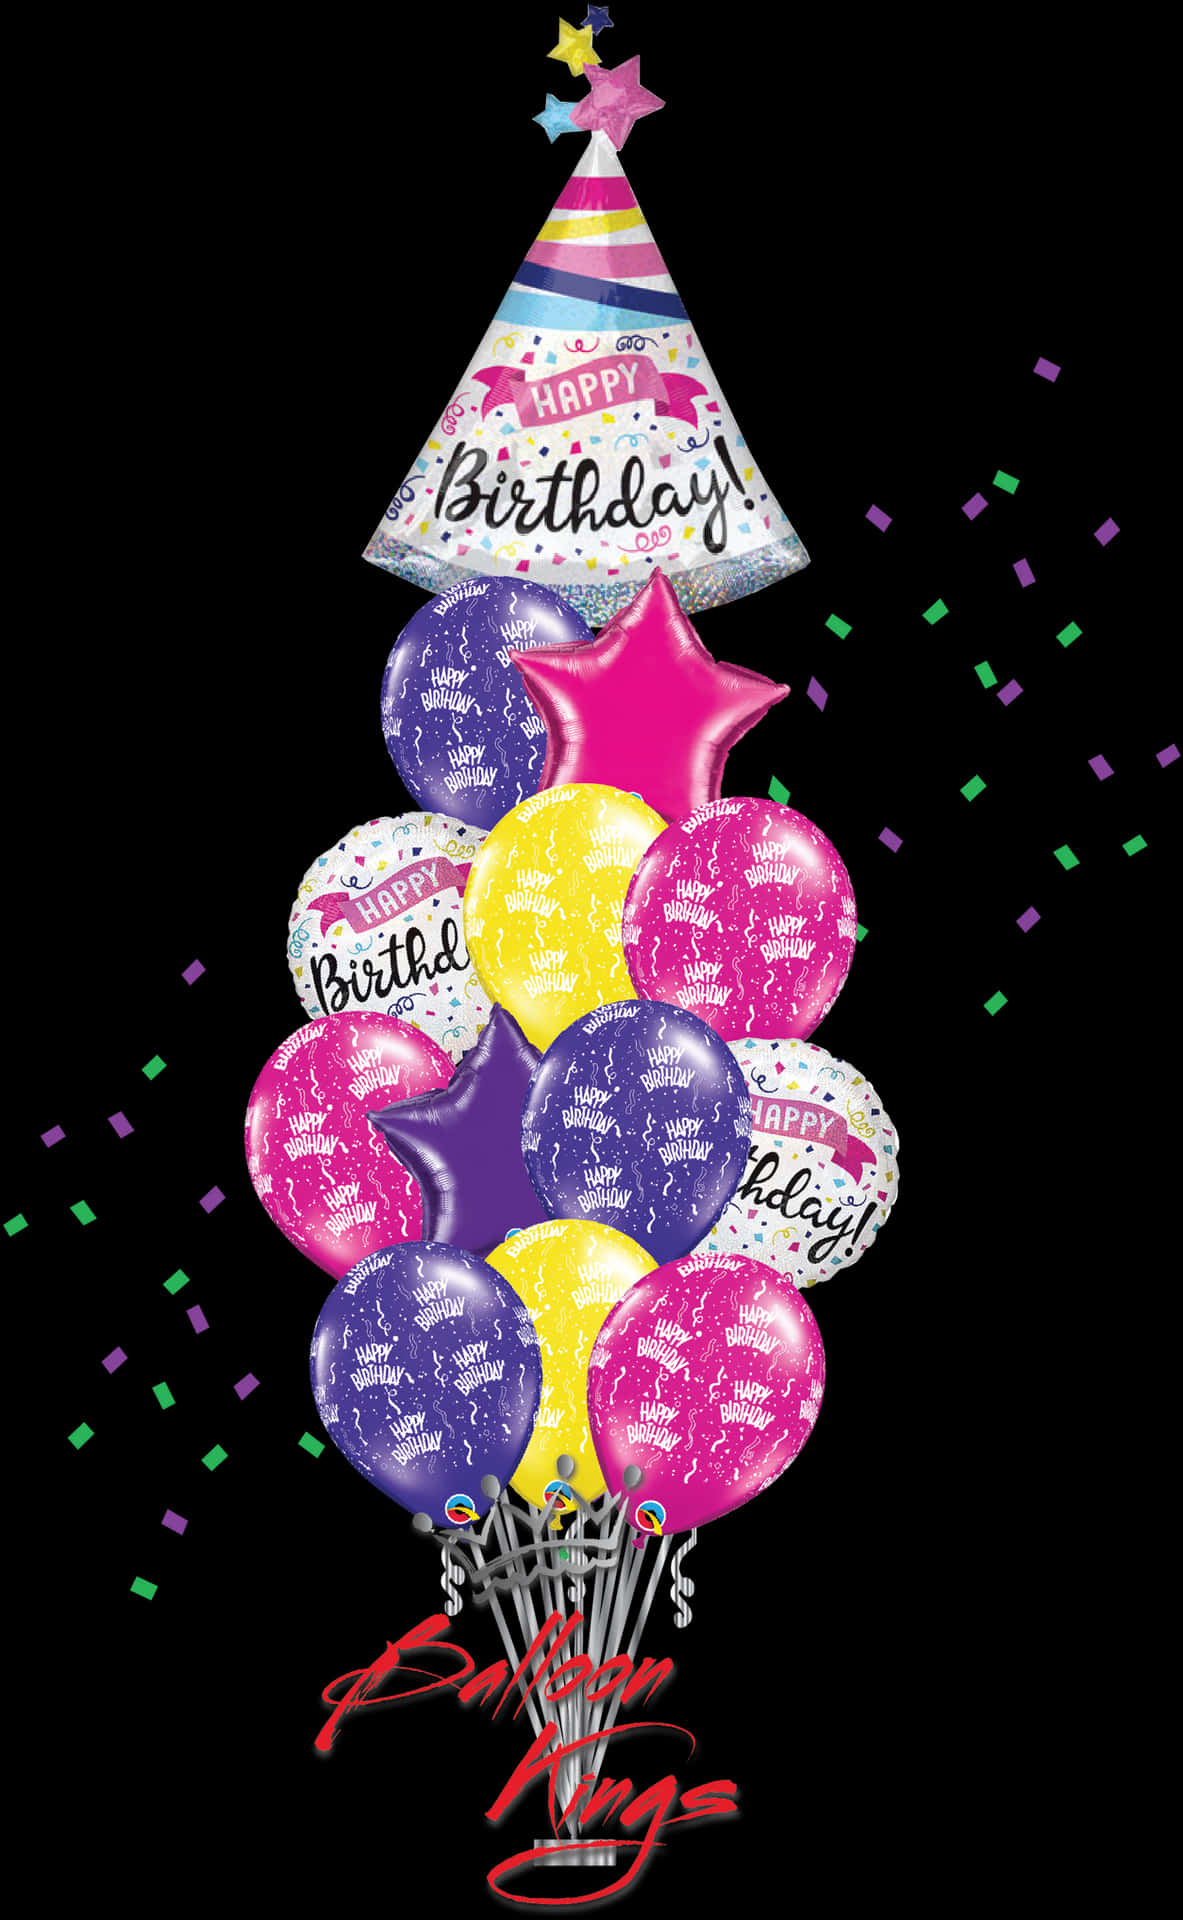 Festive Birthday Hatand Balloons PNG image